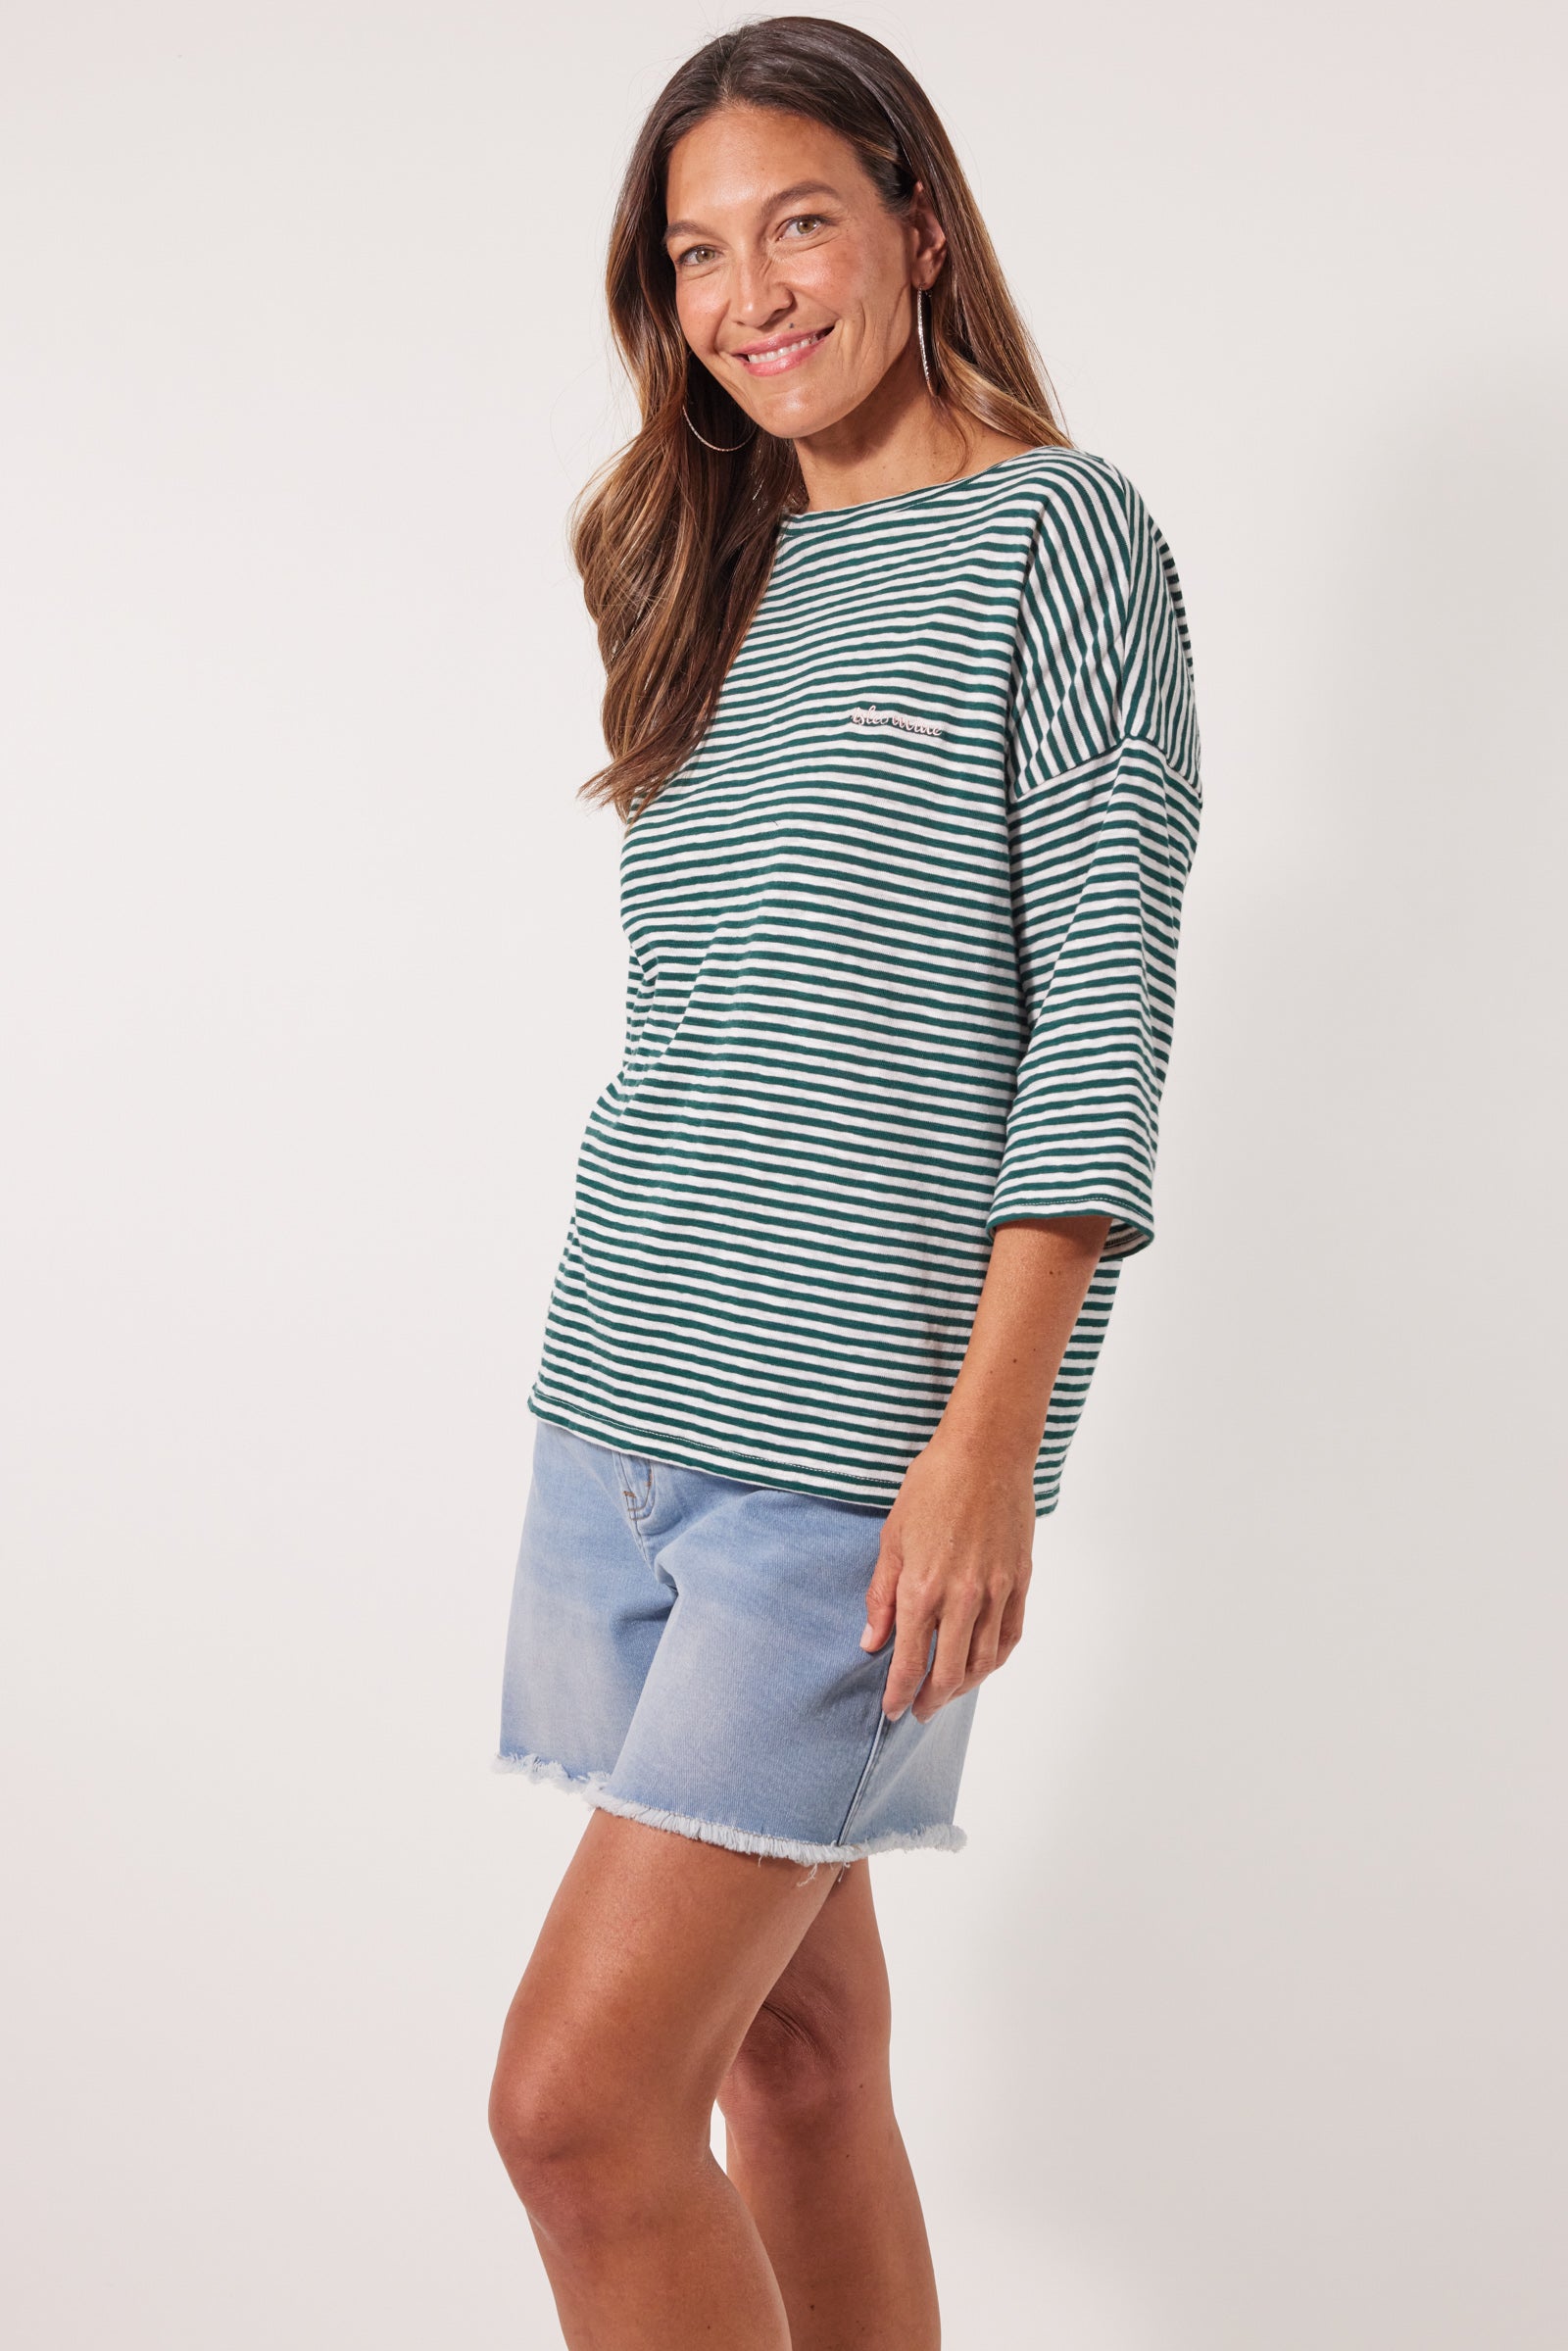 Tisane Stripe Tshirt - Teal - Isle of Mine Clothing - Top Tshirt 3/4 Sleeve